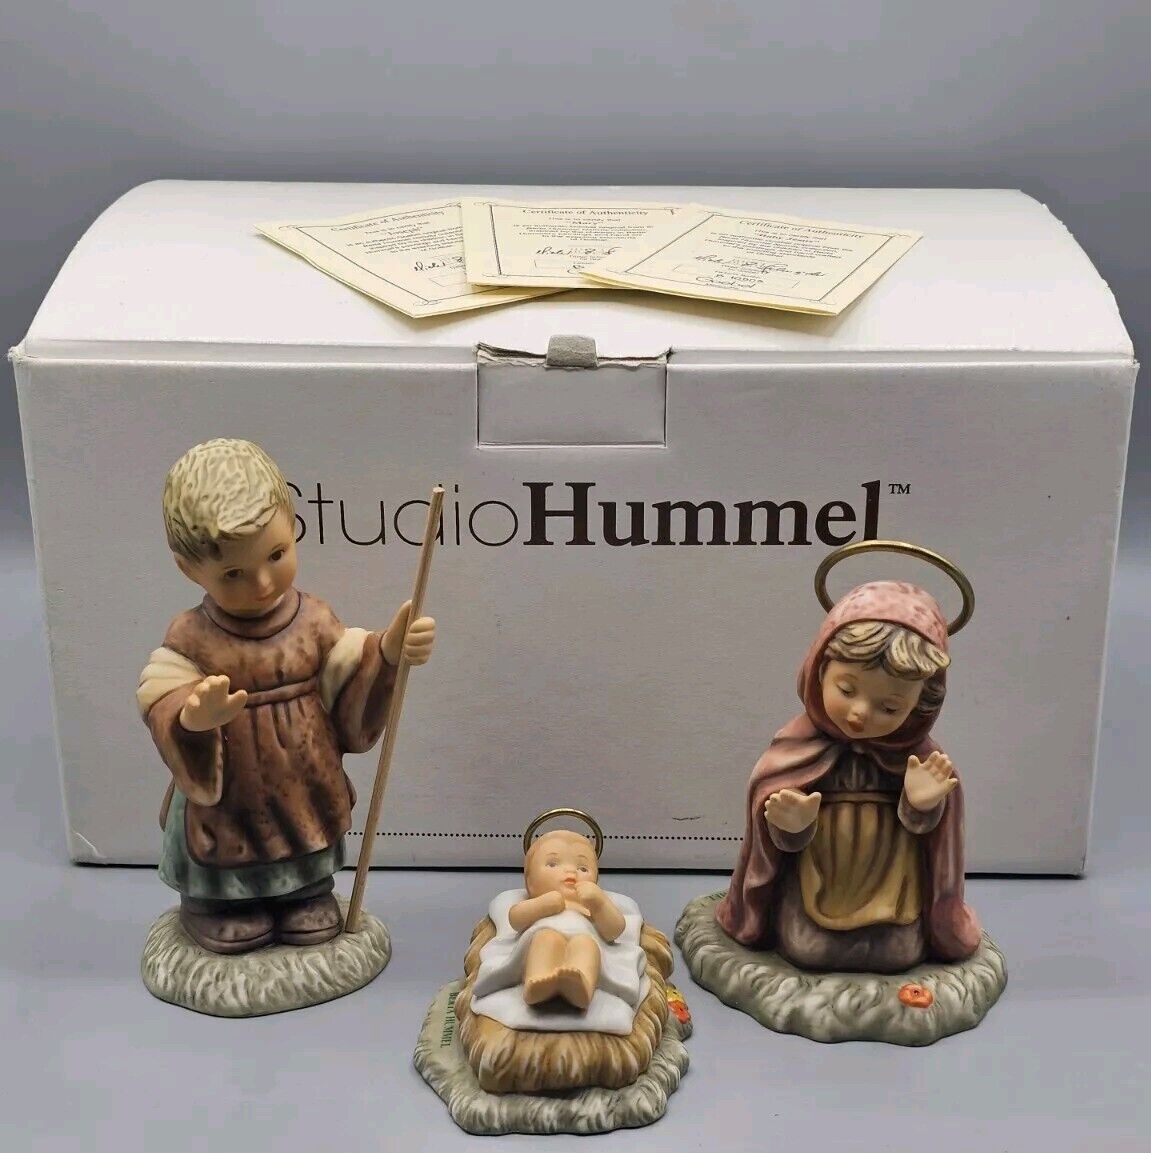 VTG 1996 Berta Hummel Nativity Set #33501 3-Piece Set w/Mary, Joseph, Baby Jesus